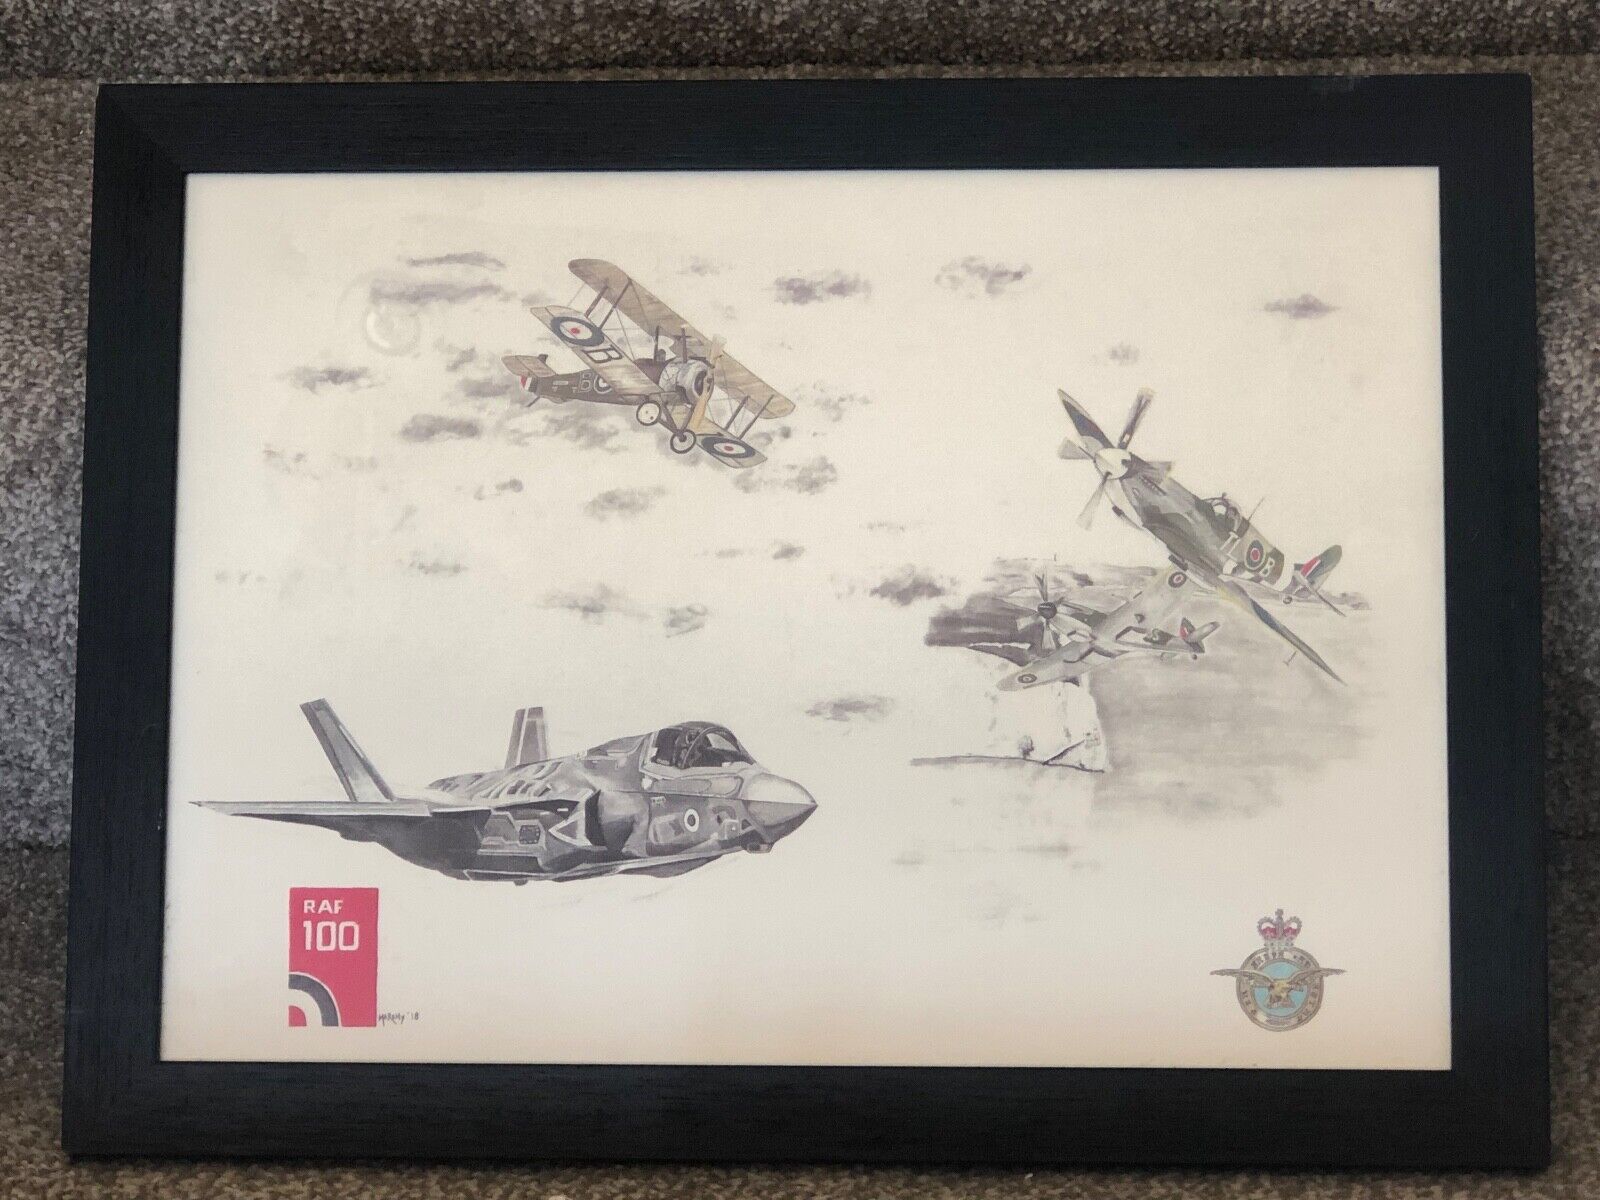 raf 100 - marshy  superb print of  various aircraft including spitfires